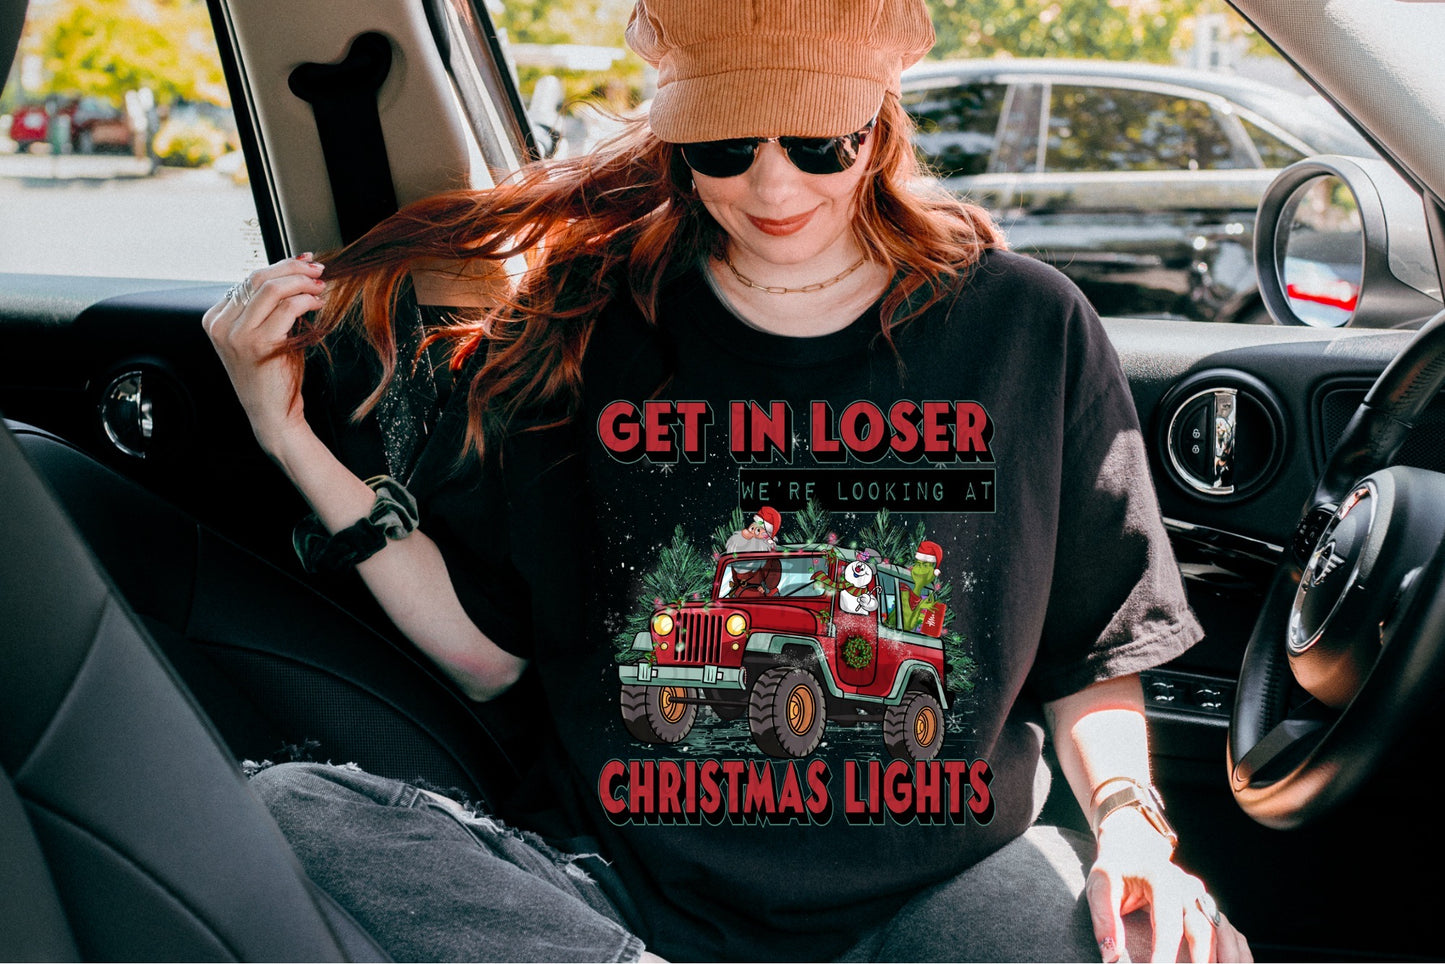 GET IN LOSER WE’RE LOOKING AT CHRISTMAS LIGHTS